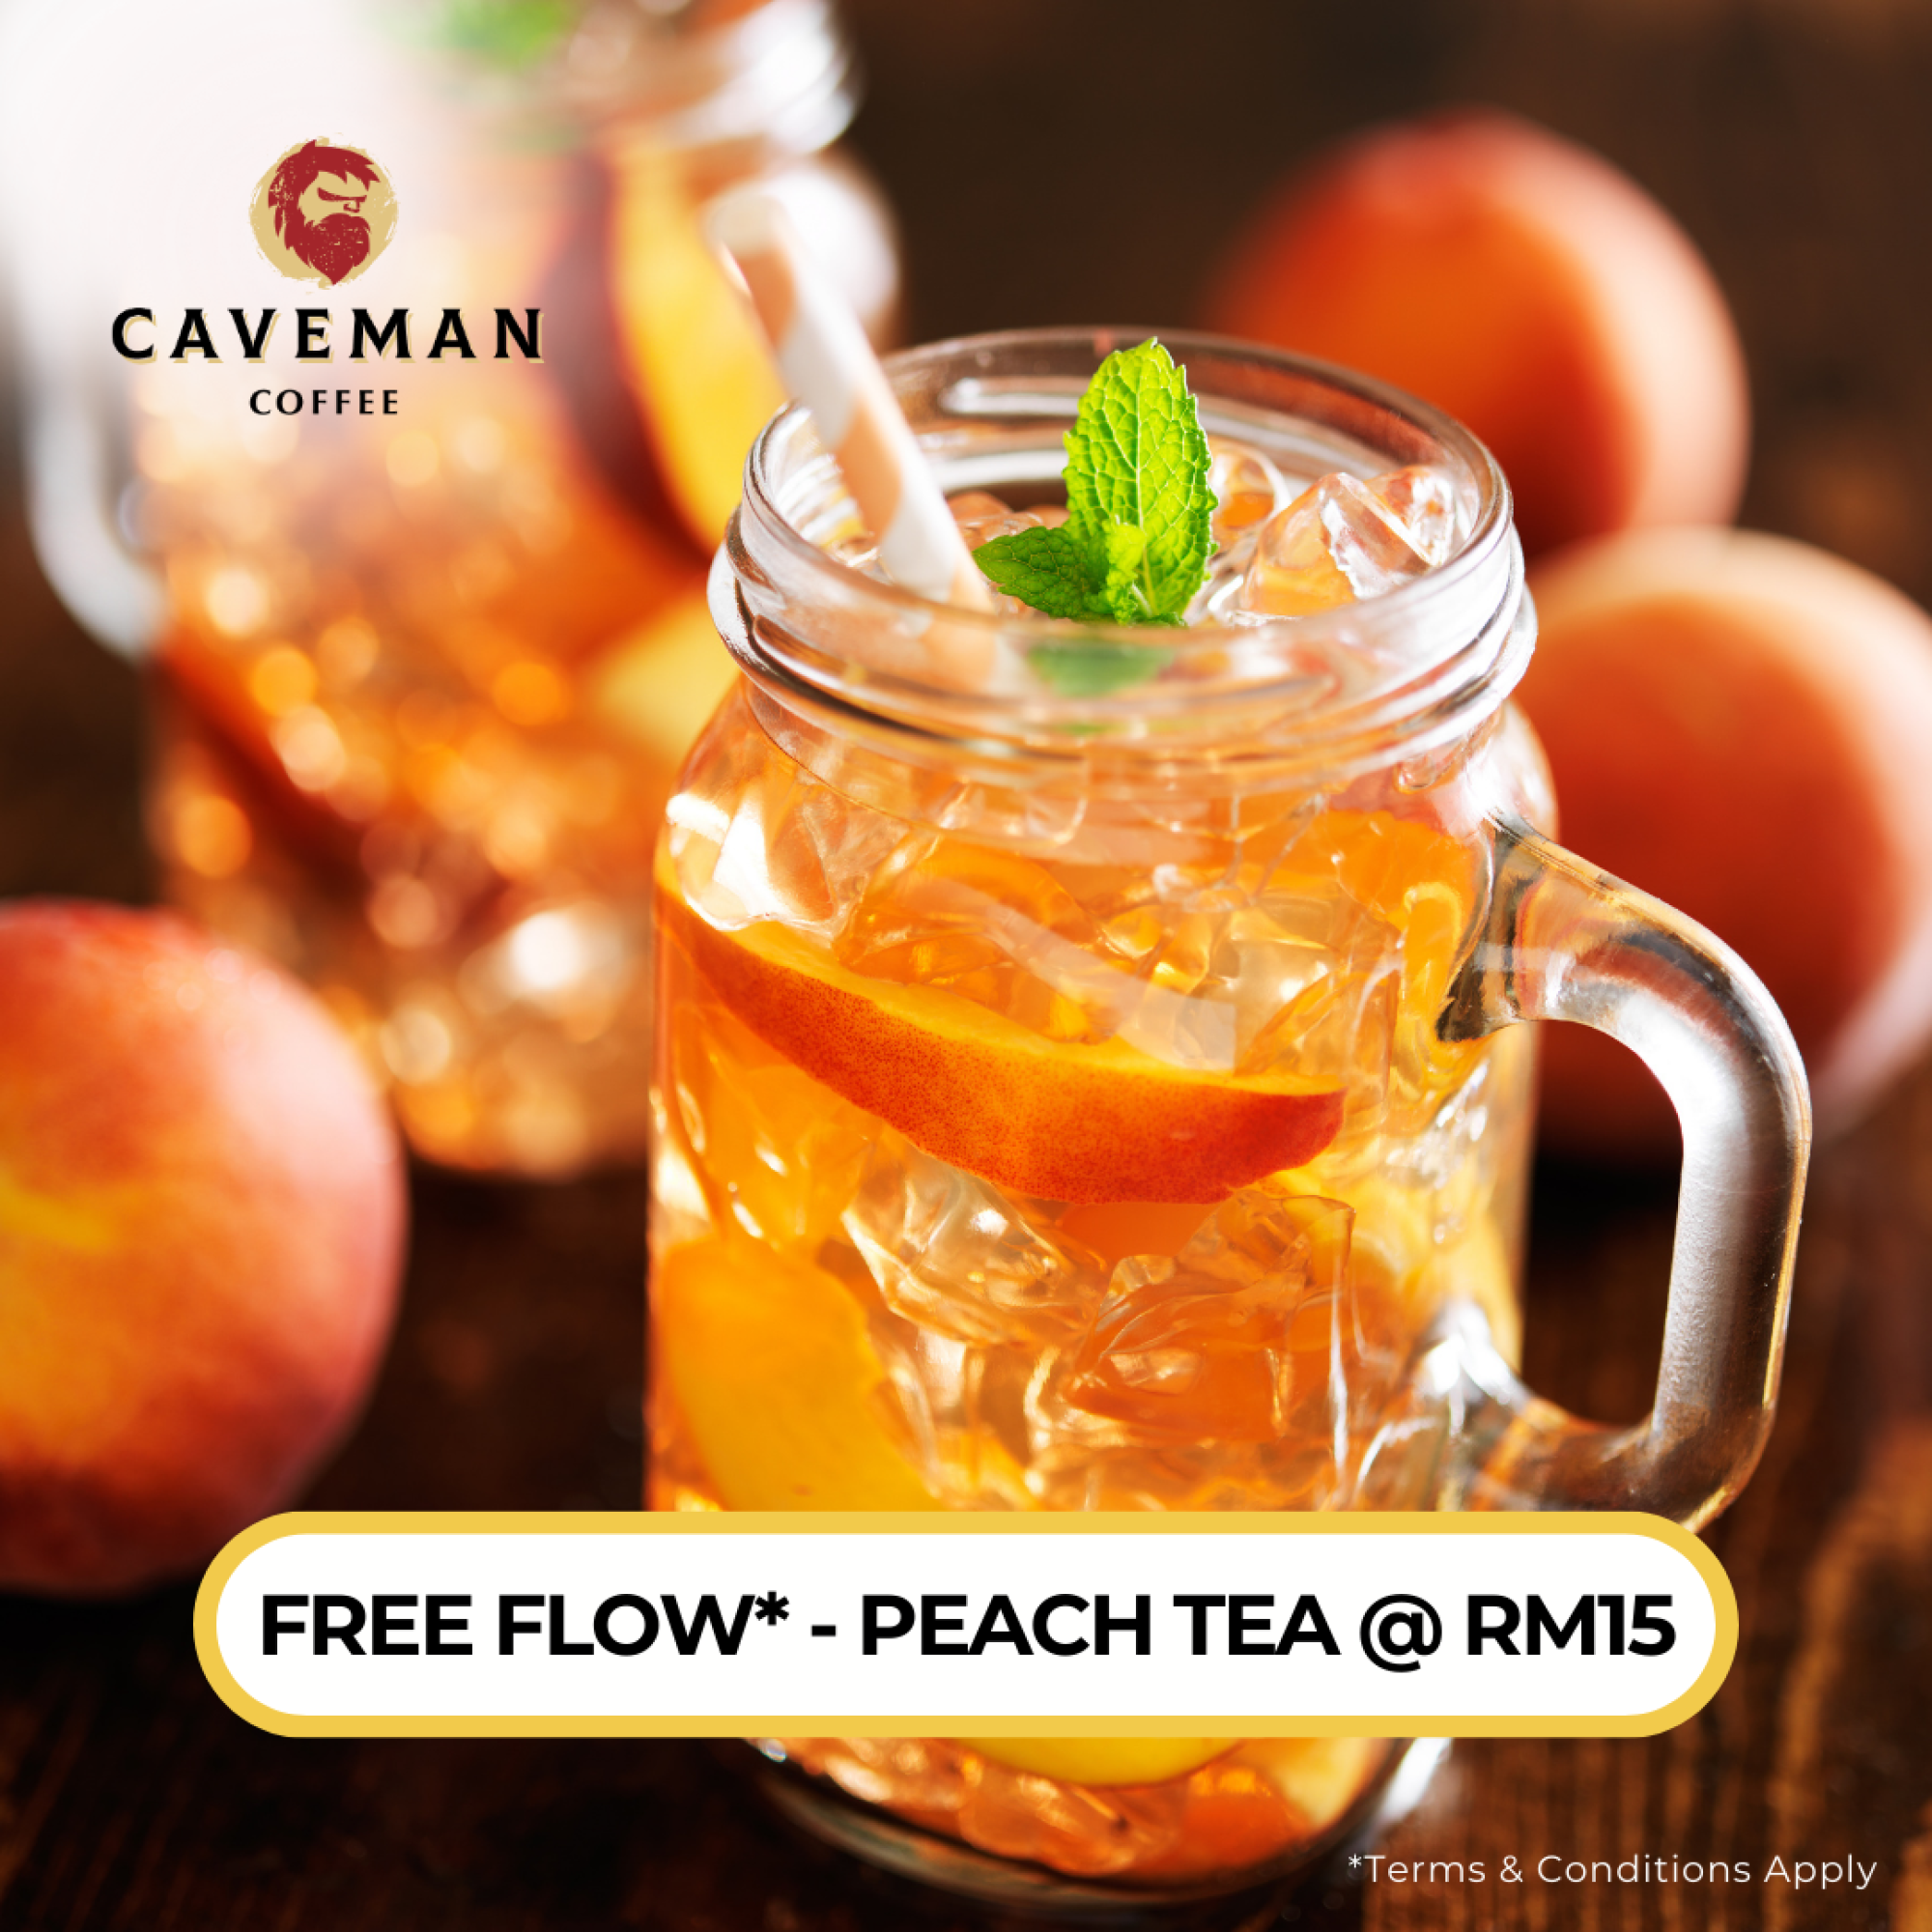 FREE FLOW* - PEACH TEA